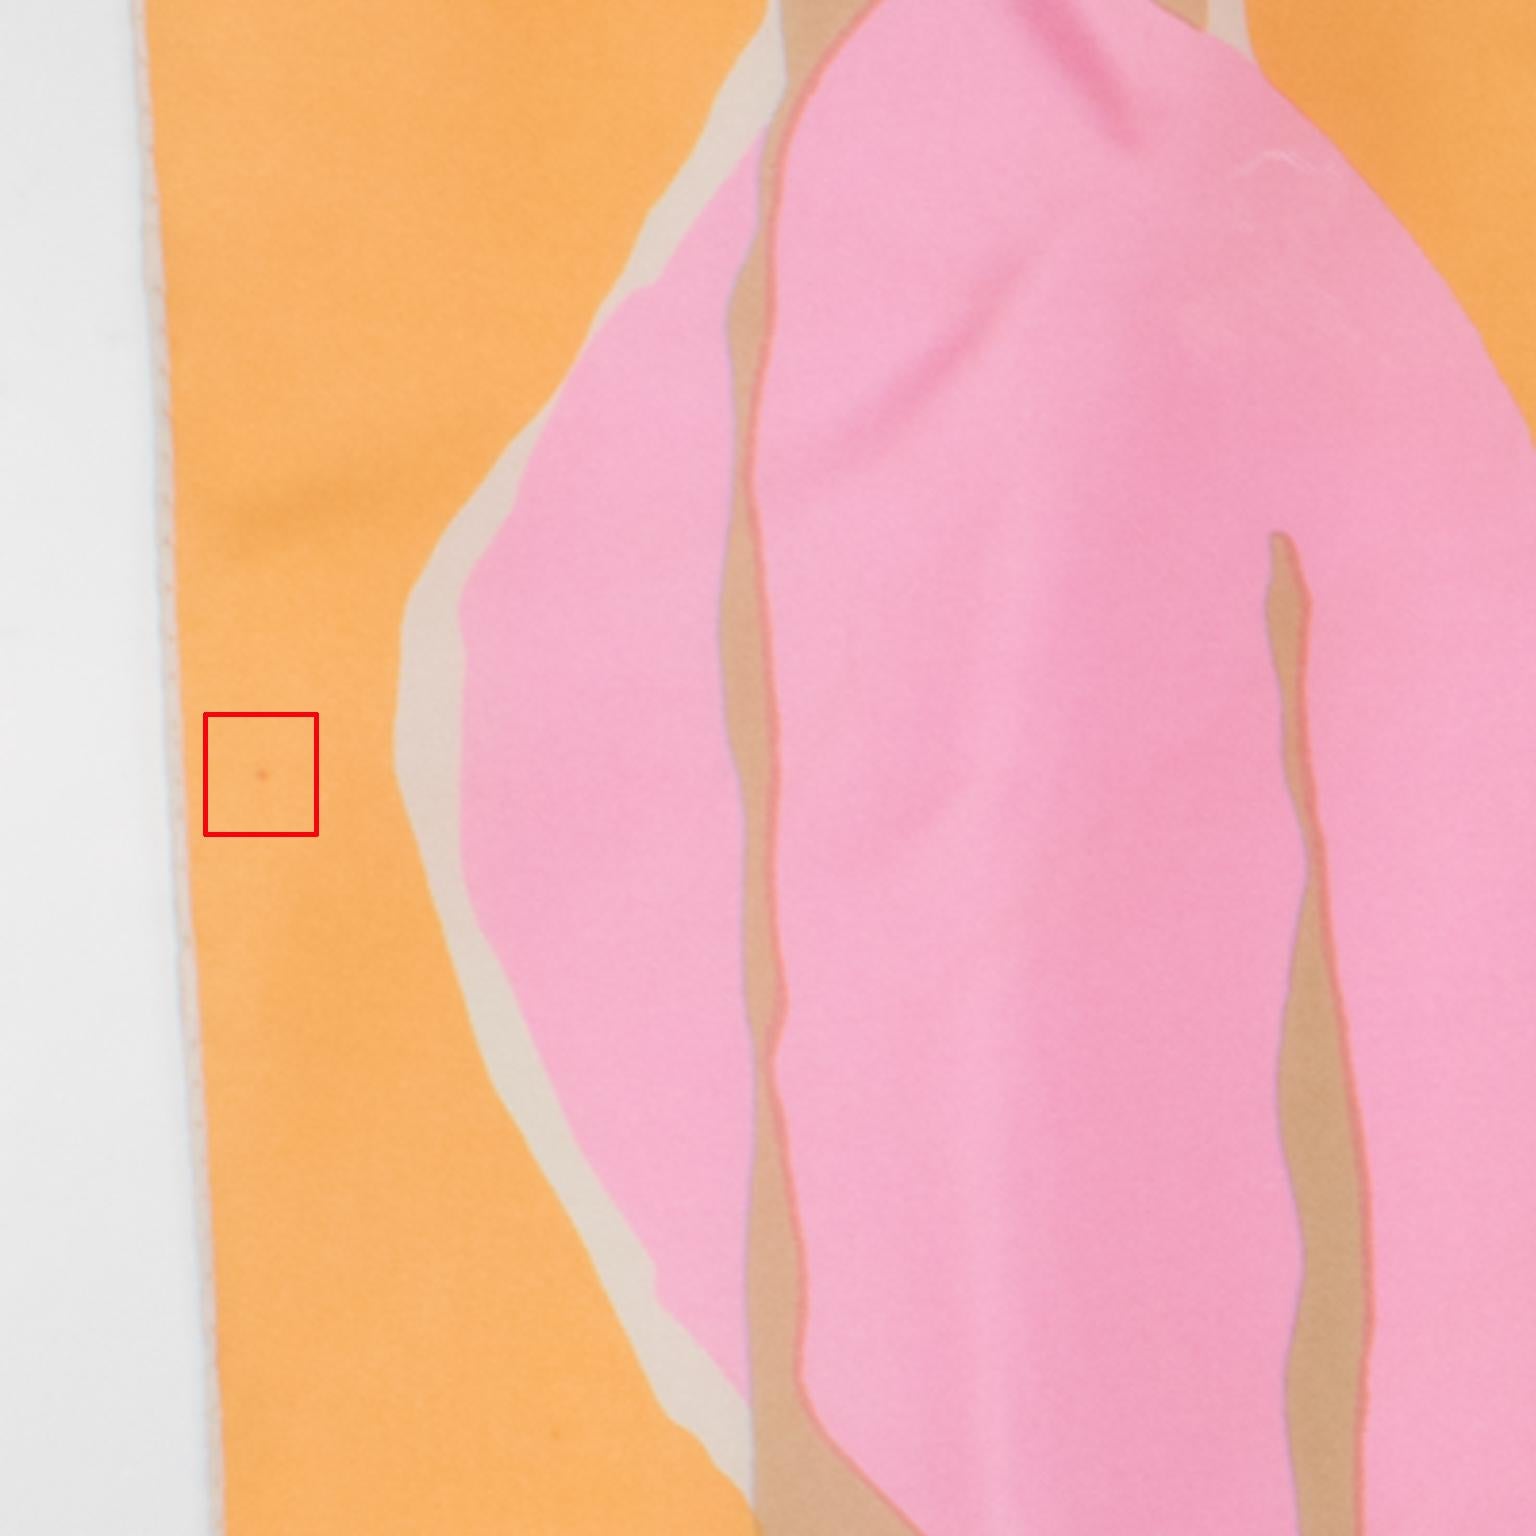 Nina Ricci Paris Silk Scarf Abstract 1970s Print in Pink and Orange 3